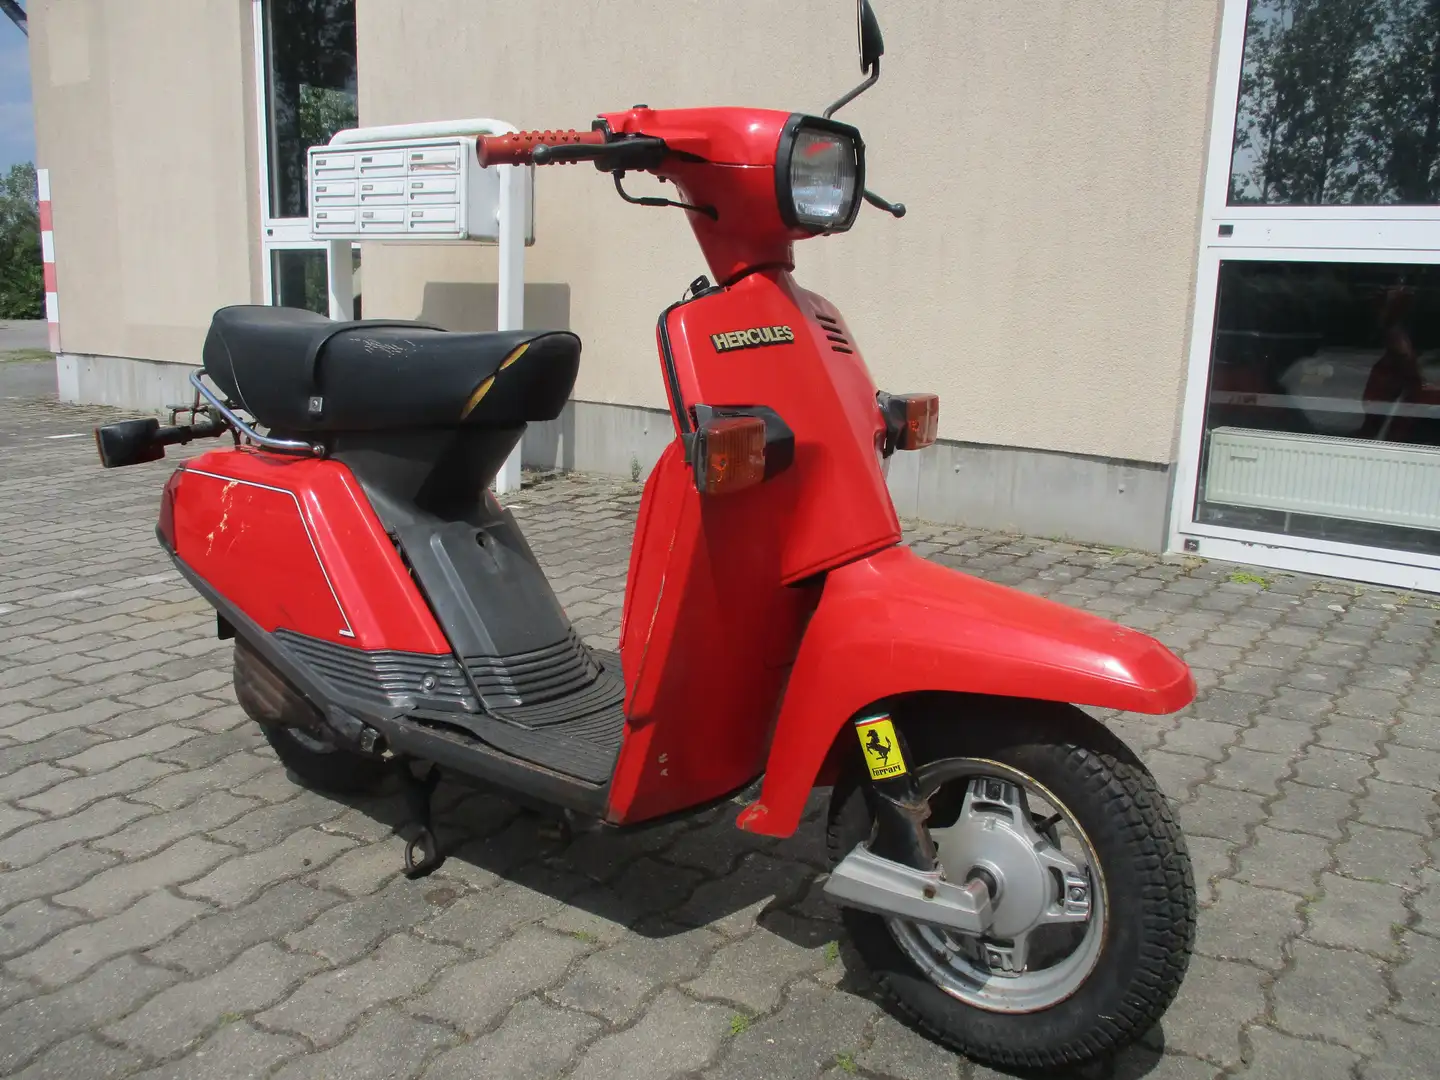 Hercules City CV Mofa/Moped/Mokick in Rot gebraucht in Calau für € 800,-